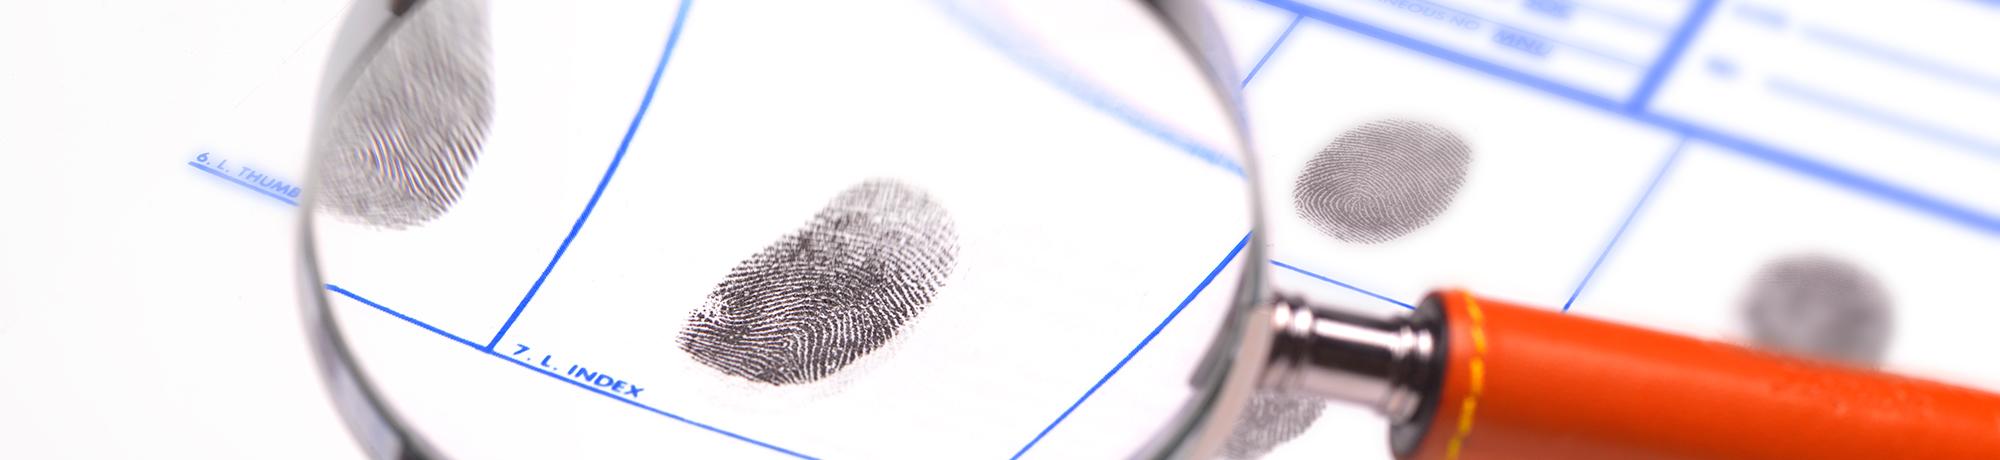 magnifying glass on a fingerprint card